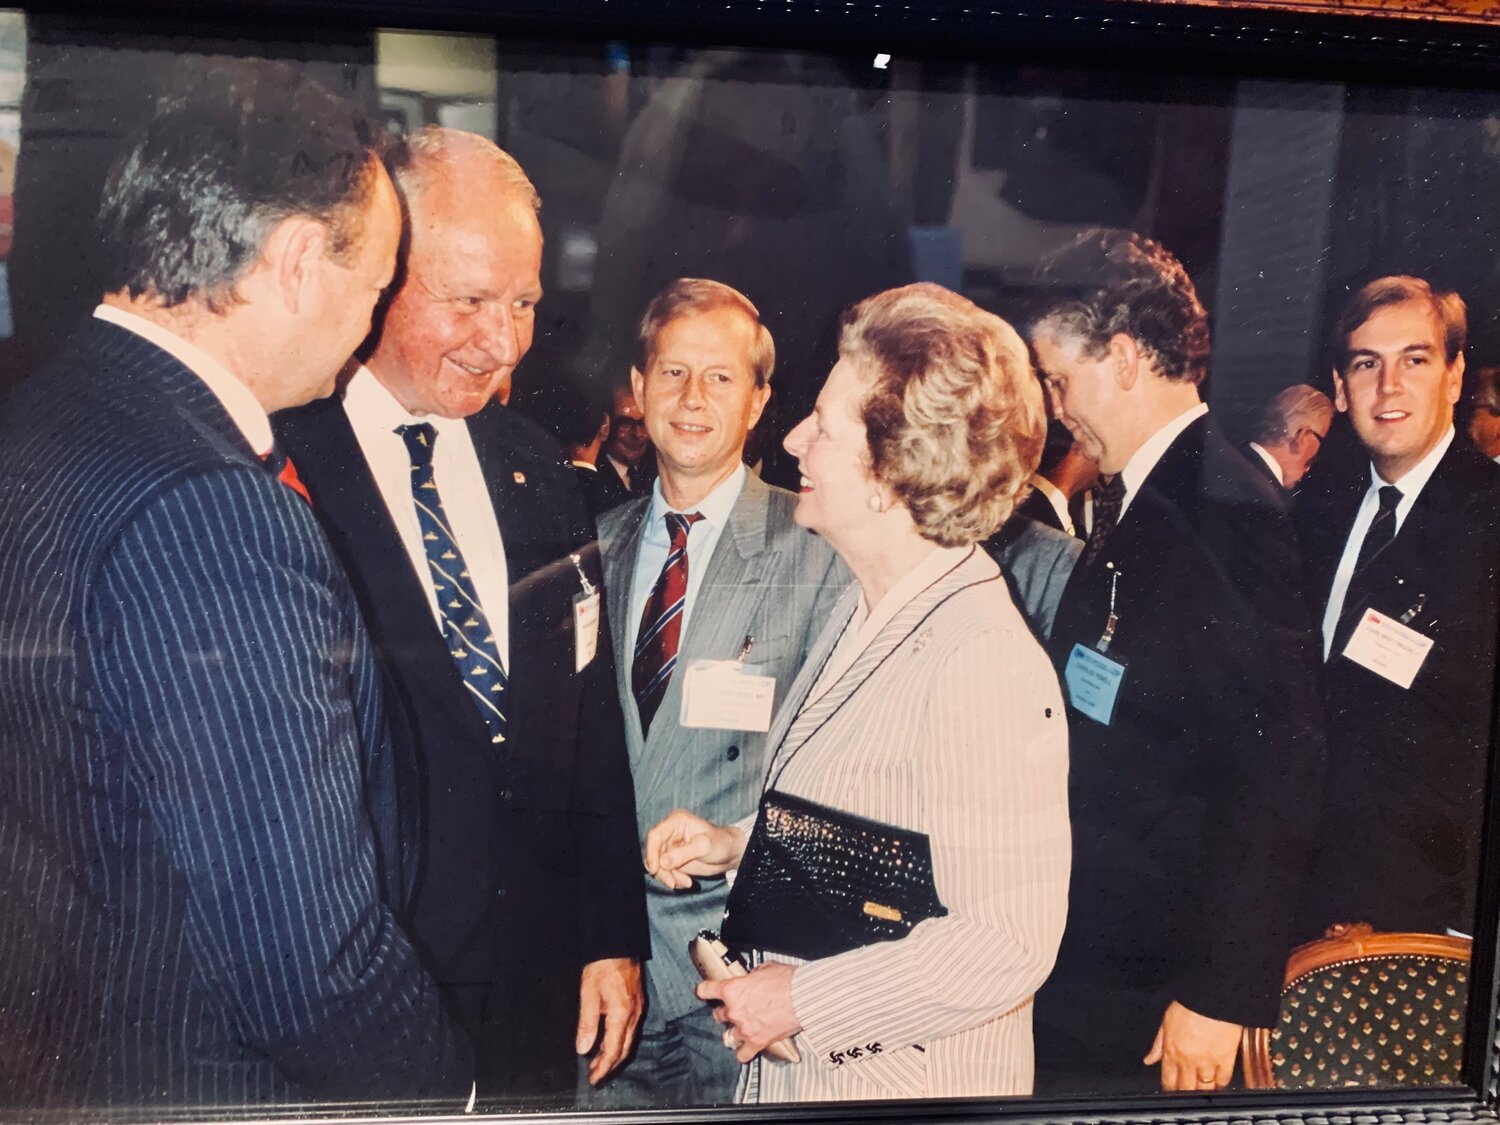 J. William Middendorf meets with Margaret Thatcher earlier in his career.